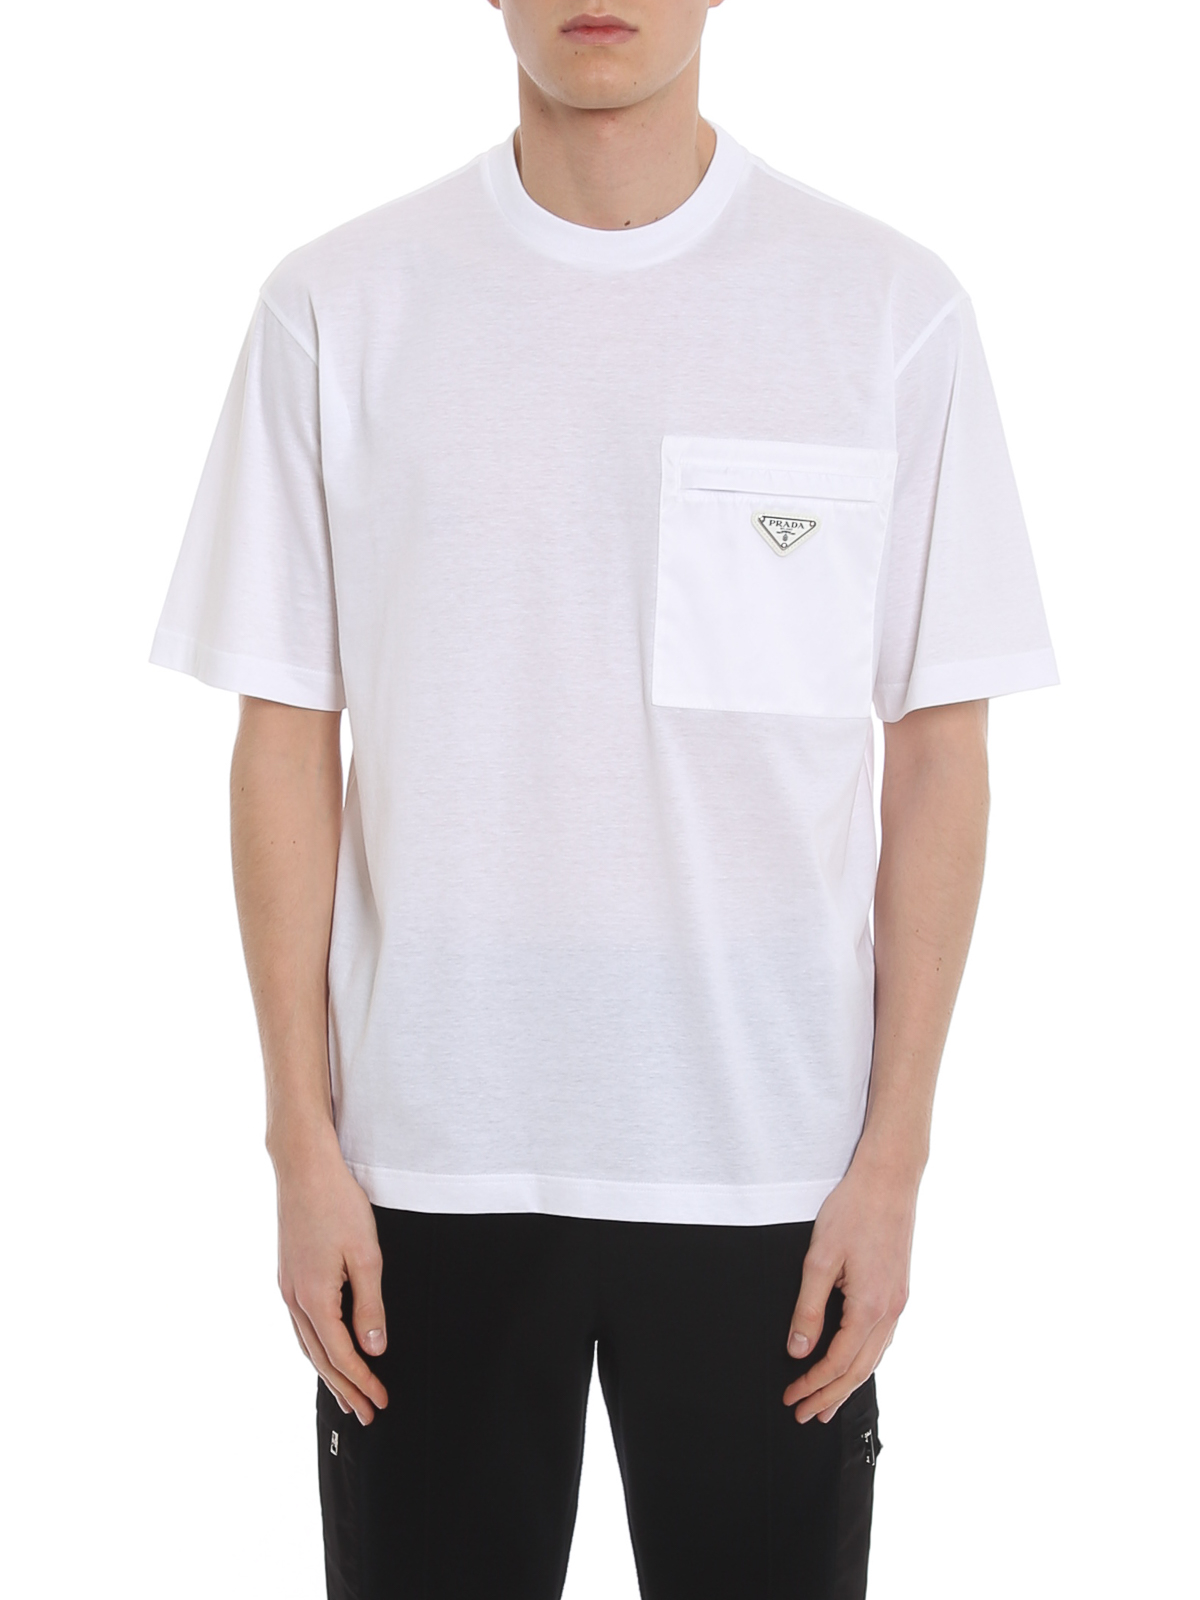 Tシャツ Prada - Tシャツ - 白 - UJN6611YFHF0009 | iKRIX shop online